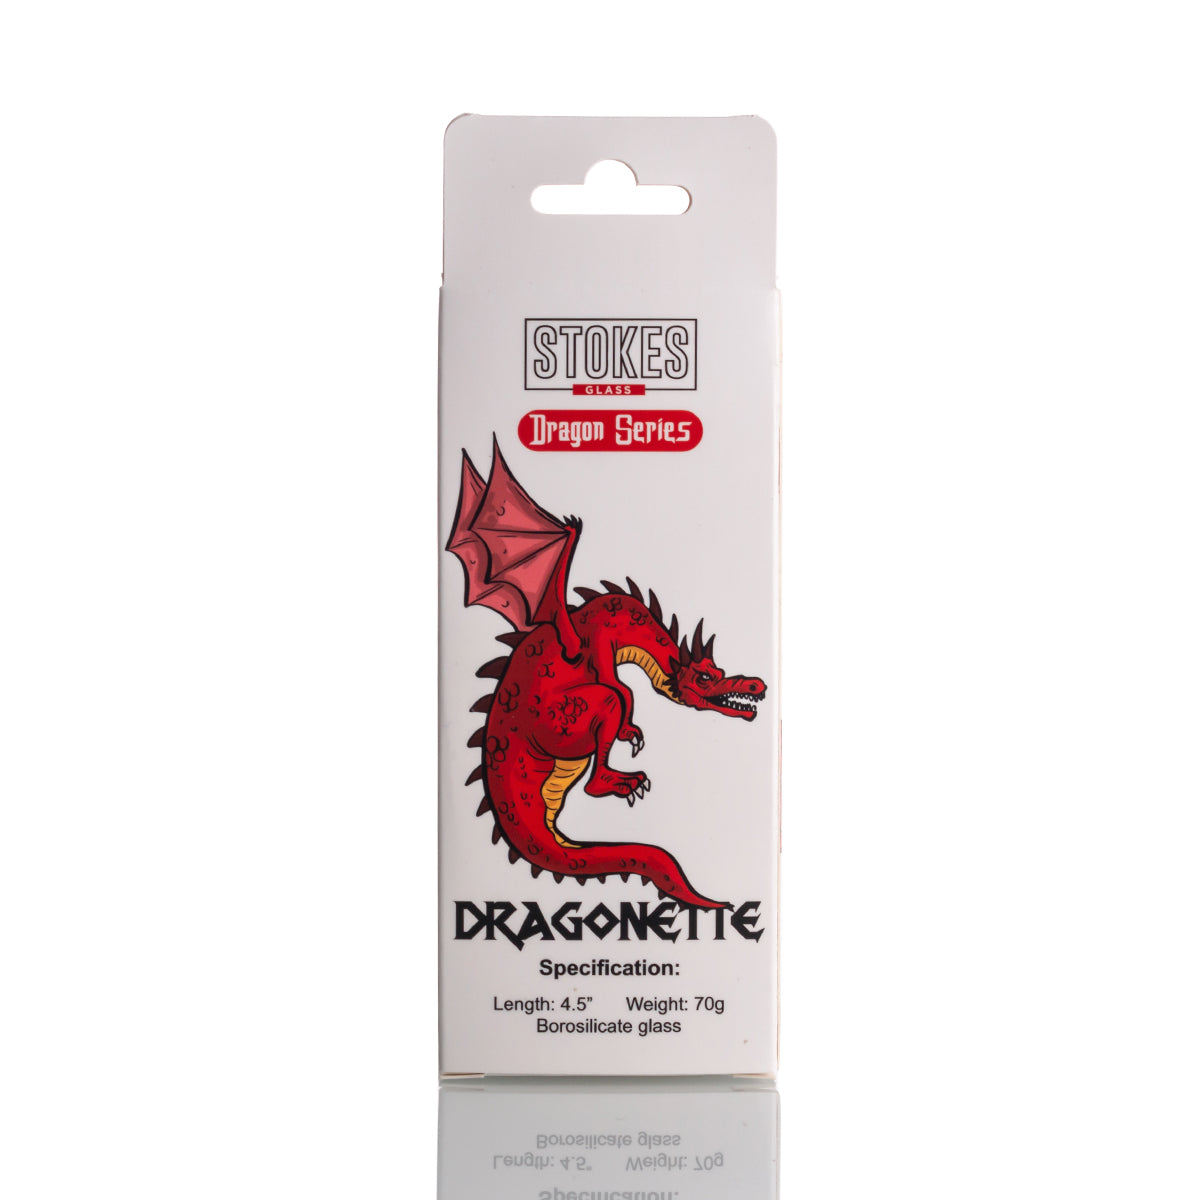 STOKES - Glass Hand Pipe Dragon series - Dragonette